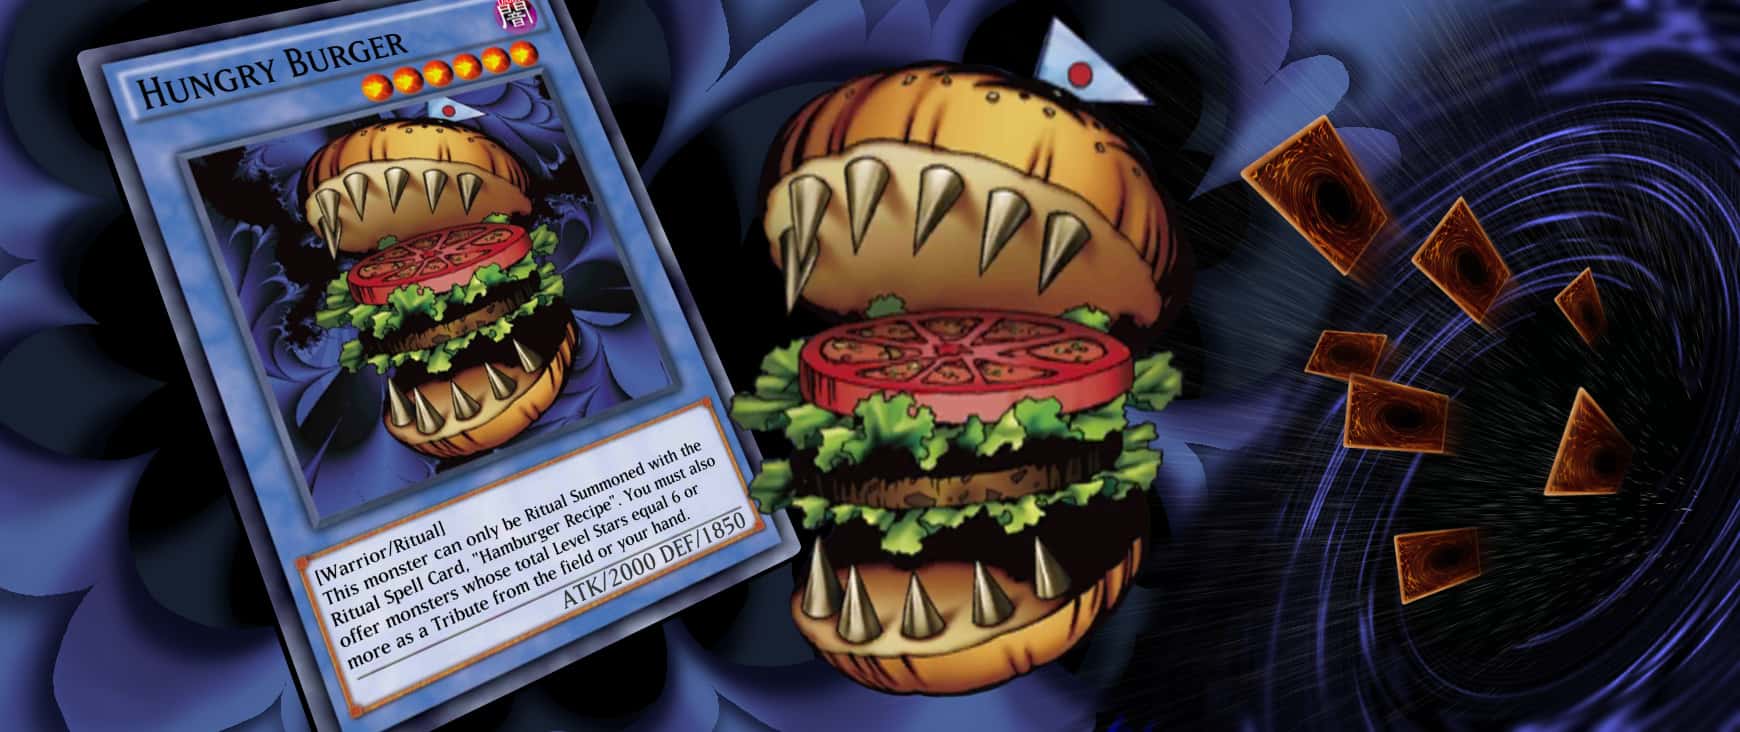 Hungry Burger Yu-Gi-Oh! card